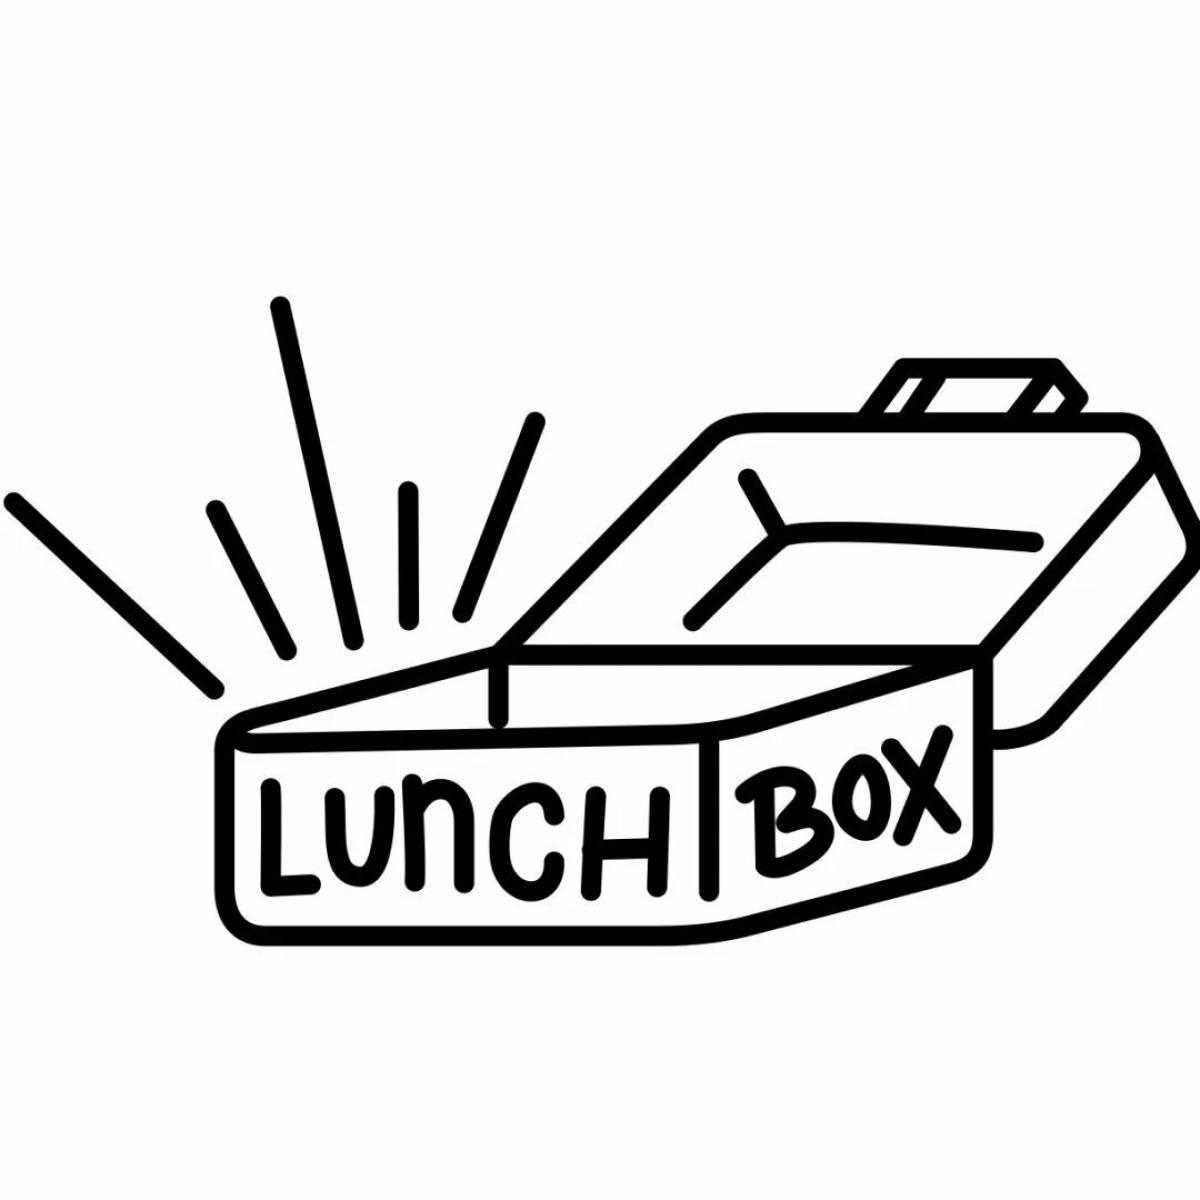 Lunch box #3